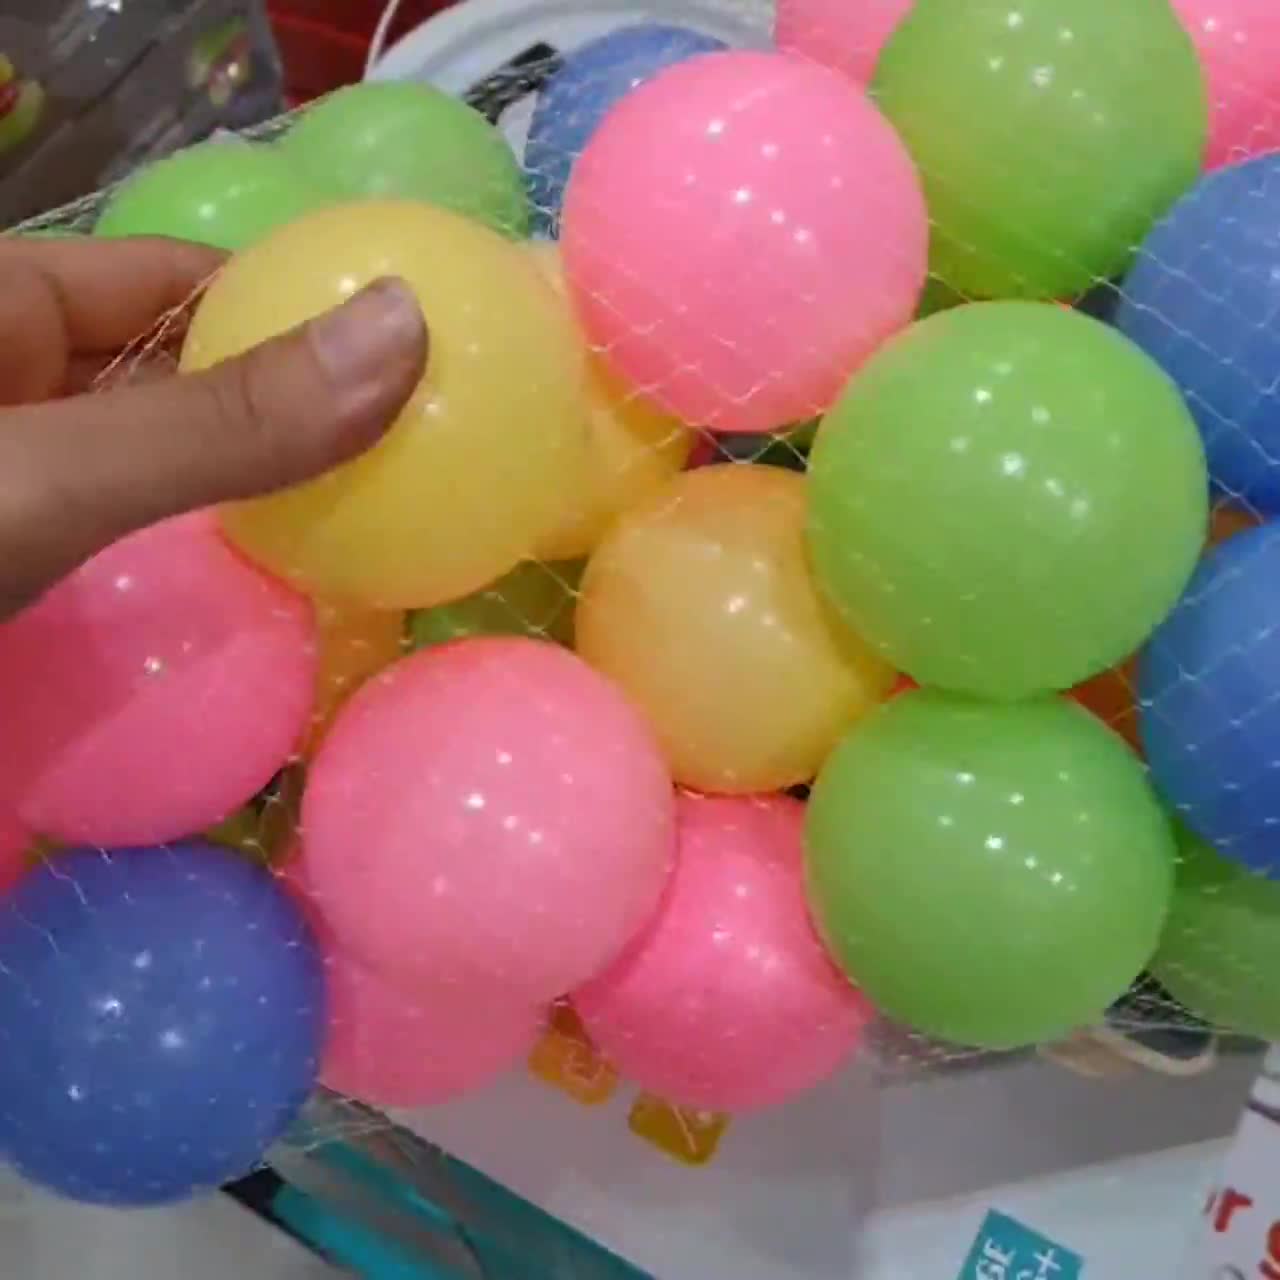 250toys-ลูกบอลปลอดสารพิษ-ลูกบอลพลาสติก-50-ลูก-100-ลูก-non-toxic-plastic-ball-บอลปลอดสารพิษ-ผ่านมาตรฐาน-มอก